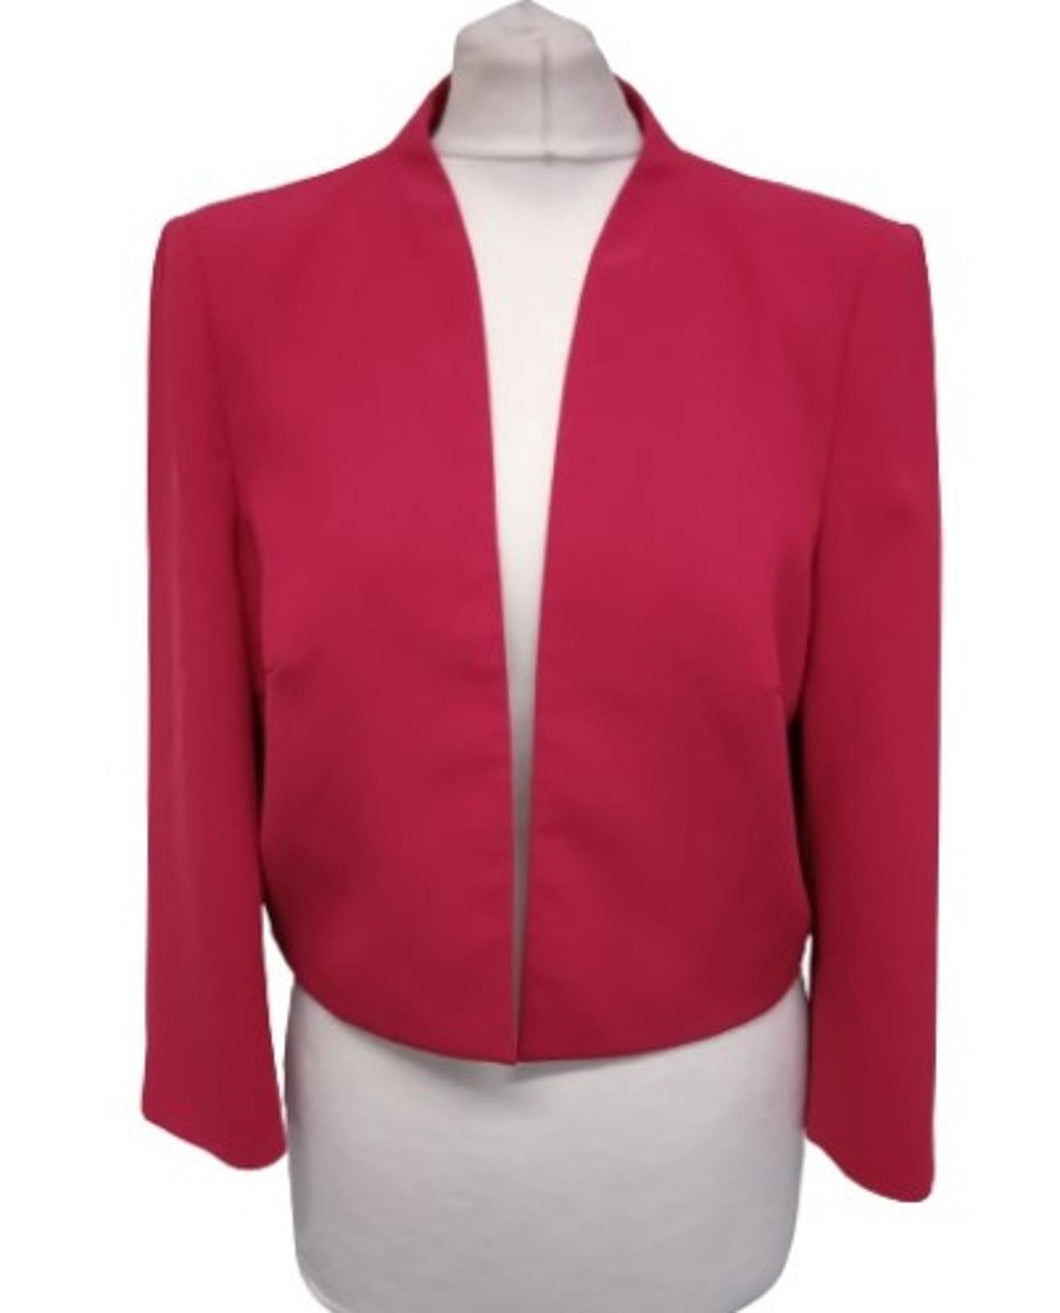 JACQUES VERT Ladies Bright Pink Open Front Bolero Blazer Jacket Size UK16